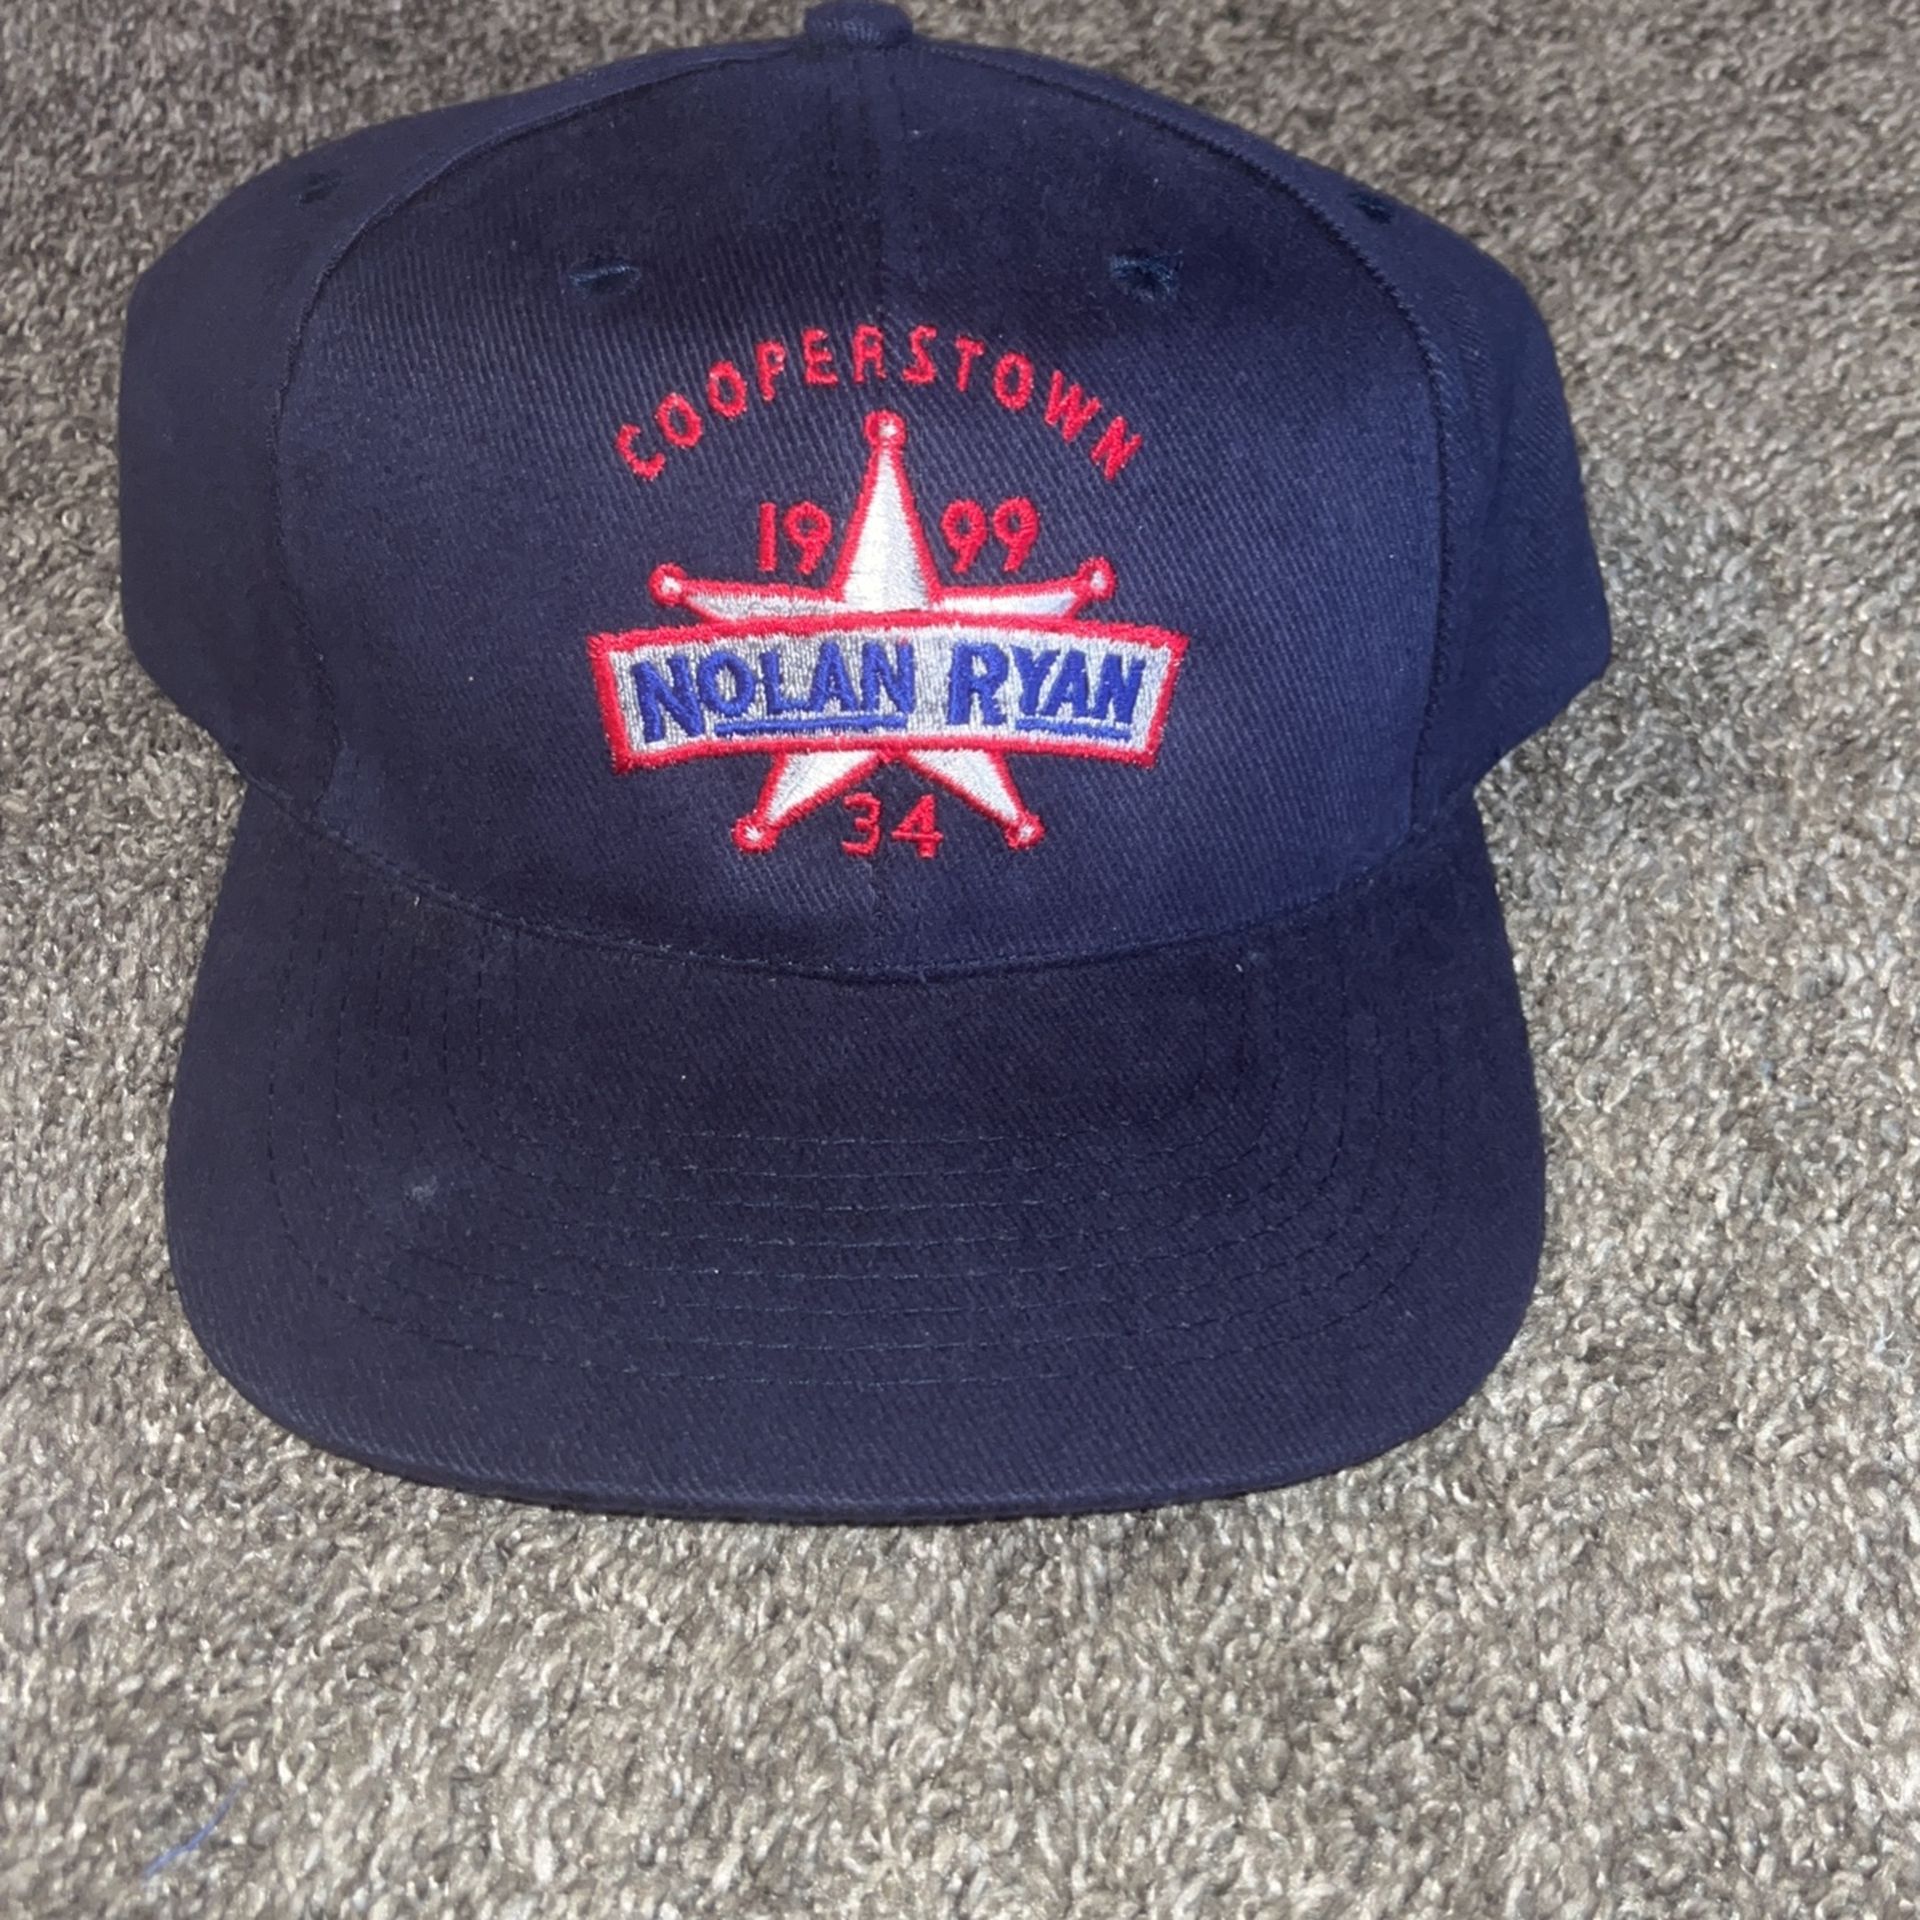 Vintage Cooperstown 1999 Nolan Ryan Hat